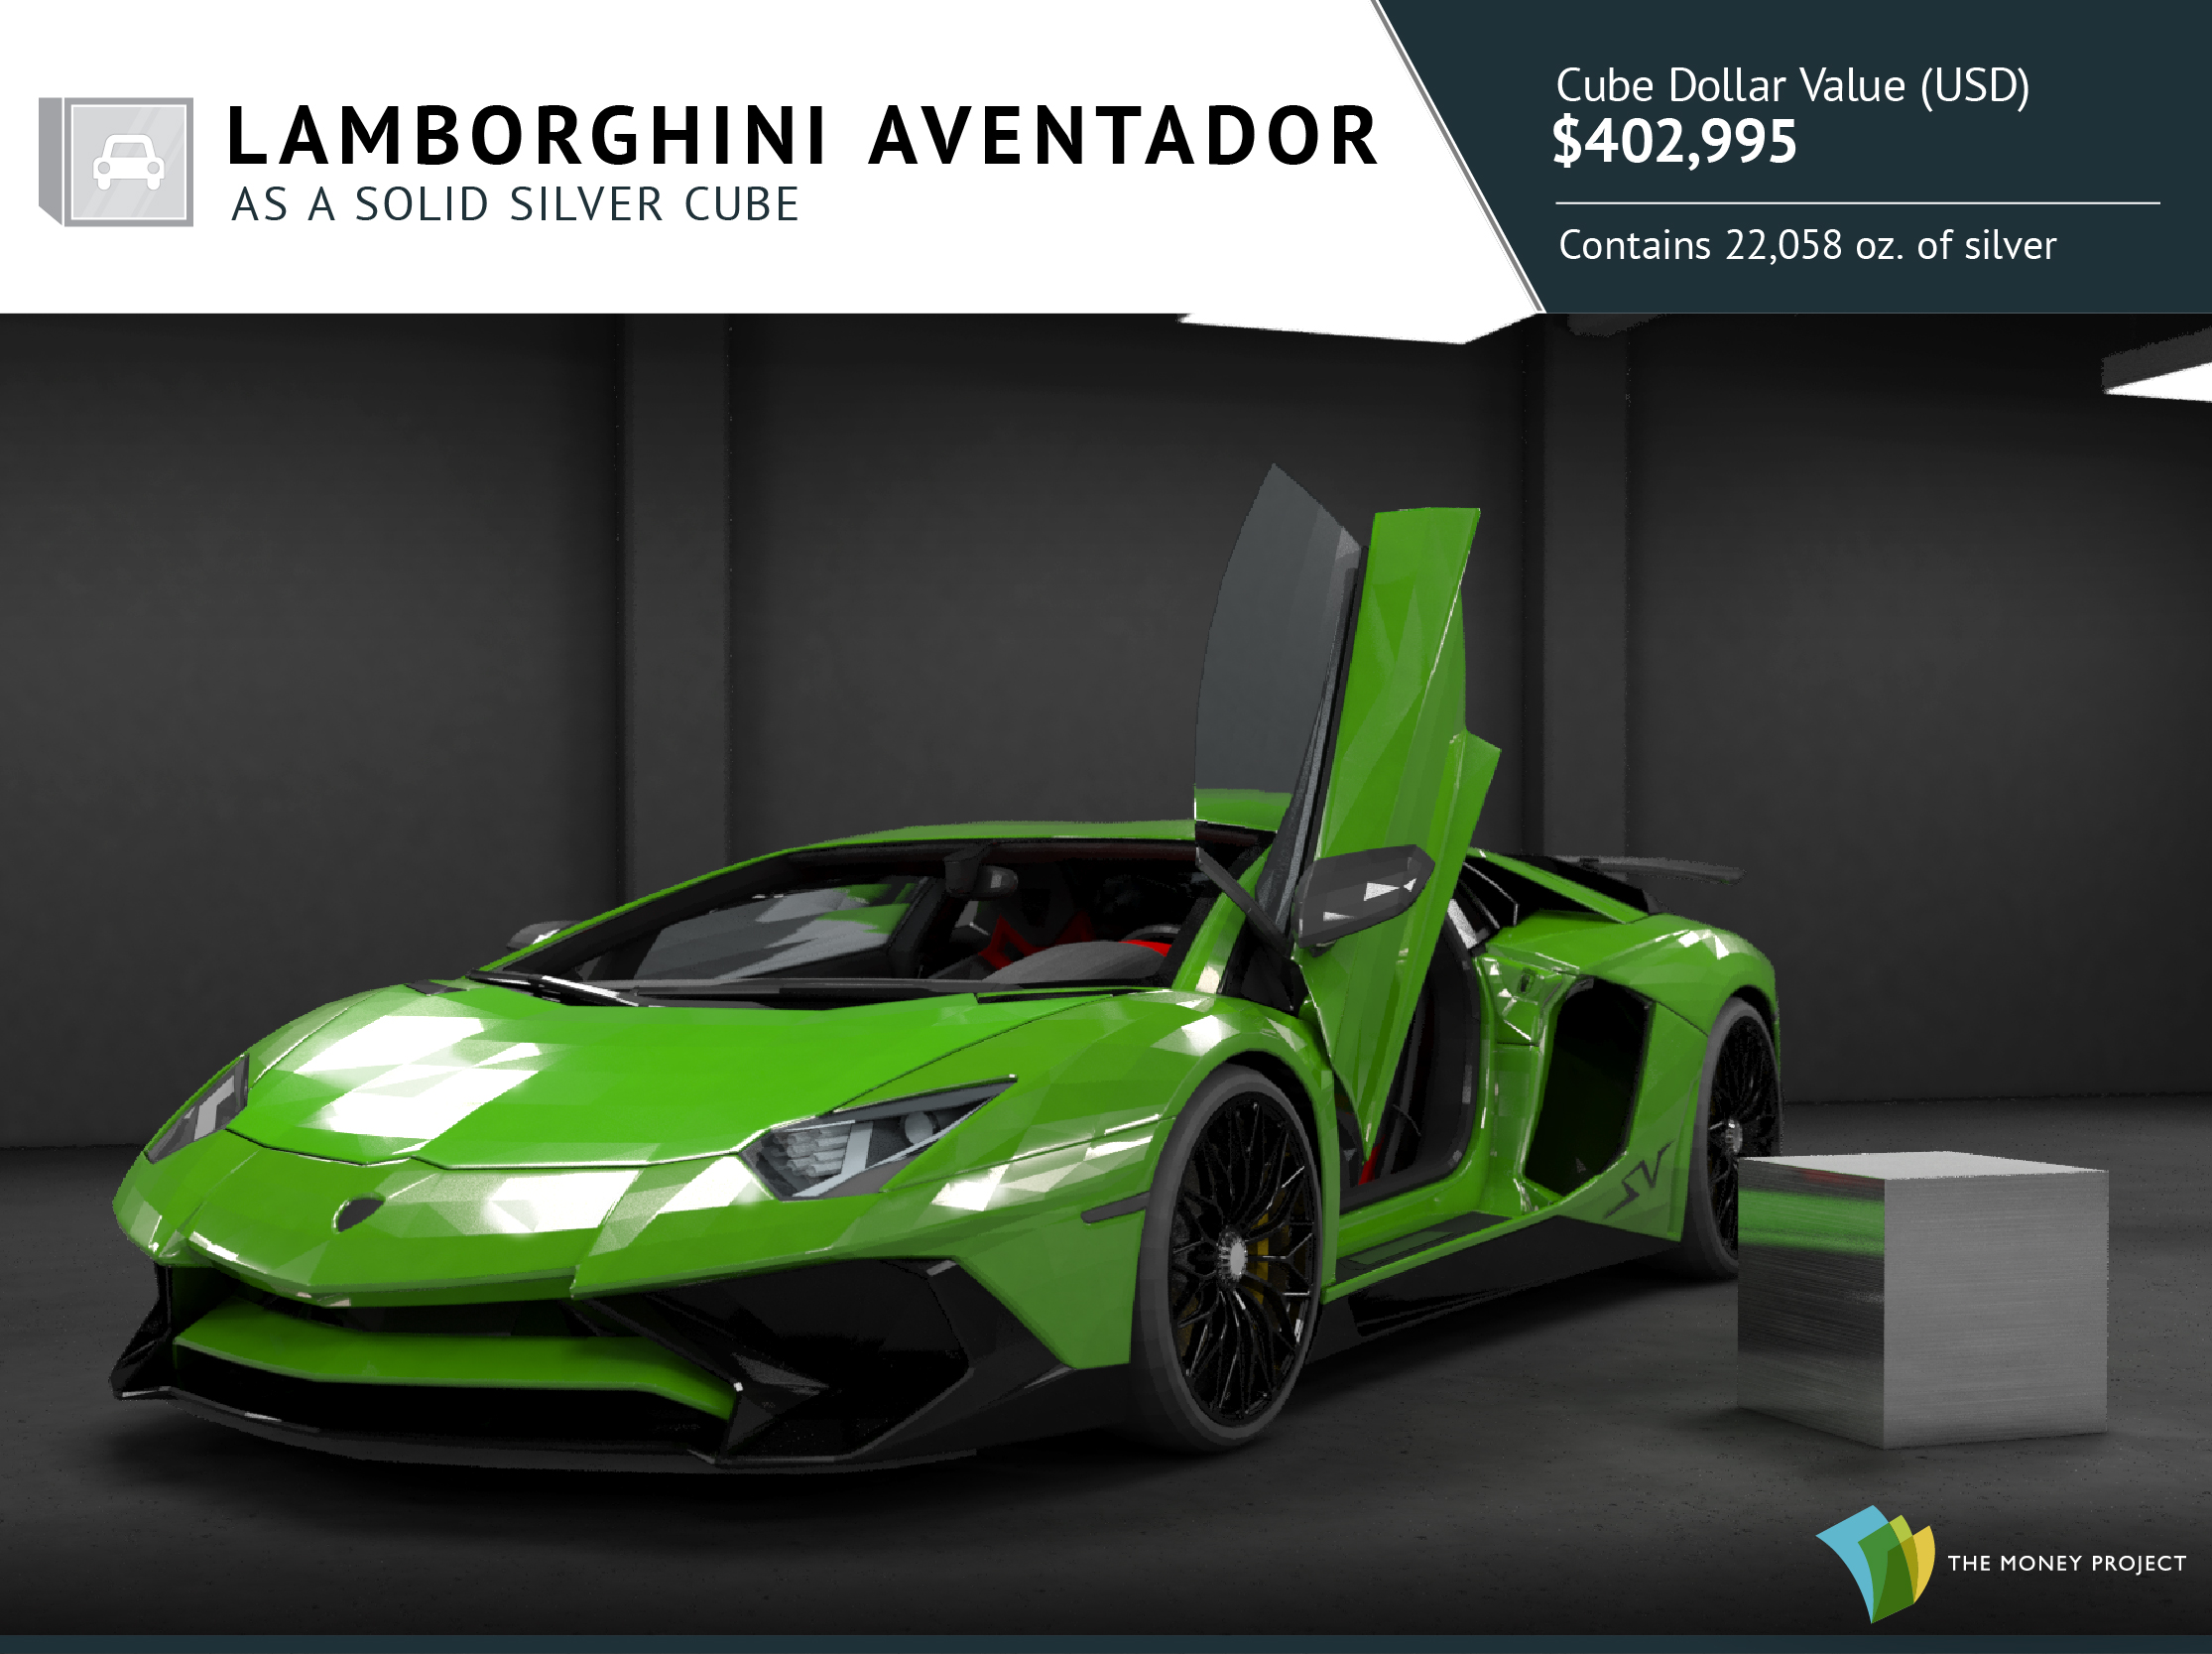 A Lamborghini's value as a silver cube